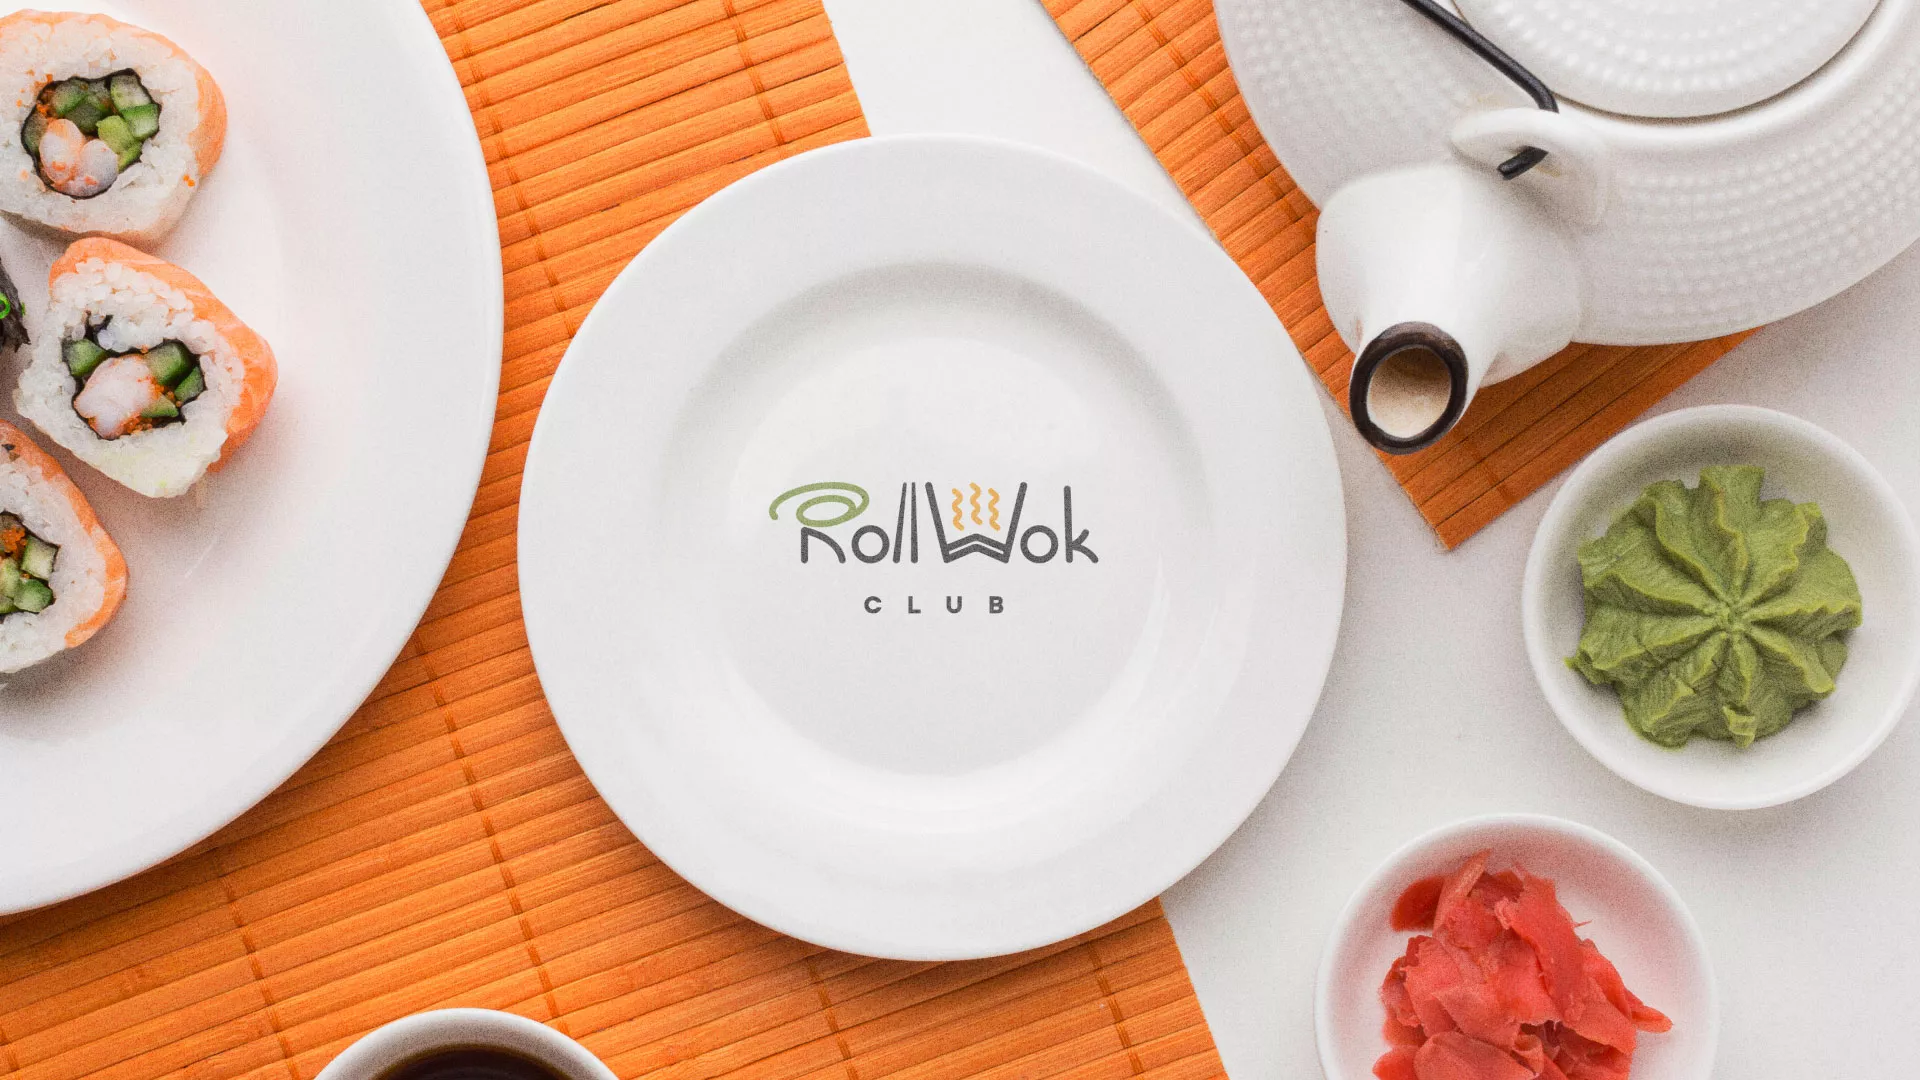 Разработка логотипа и фирменного стиля суши-бара «Roll Wok Club» в Новошахтинске